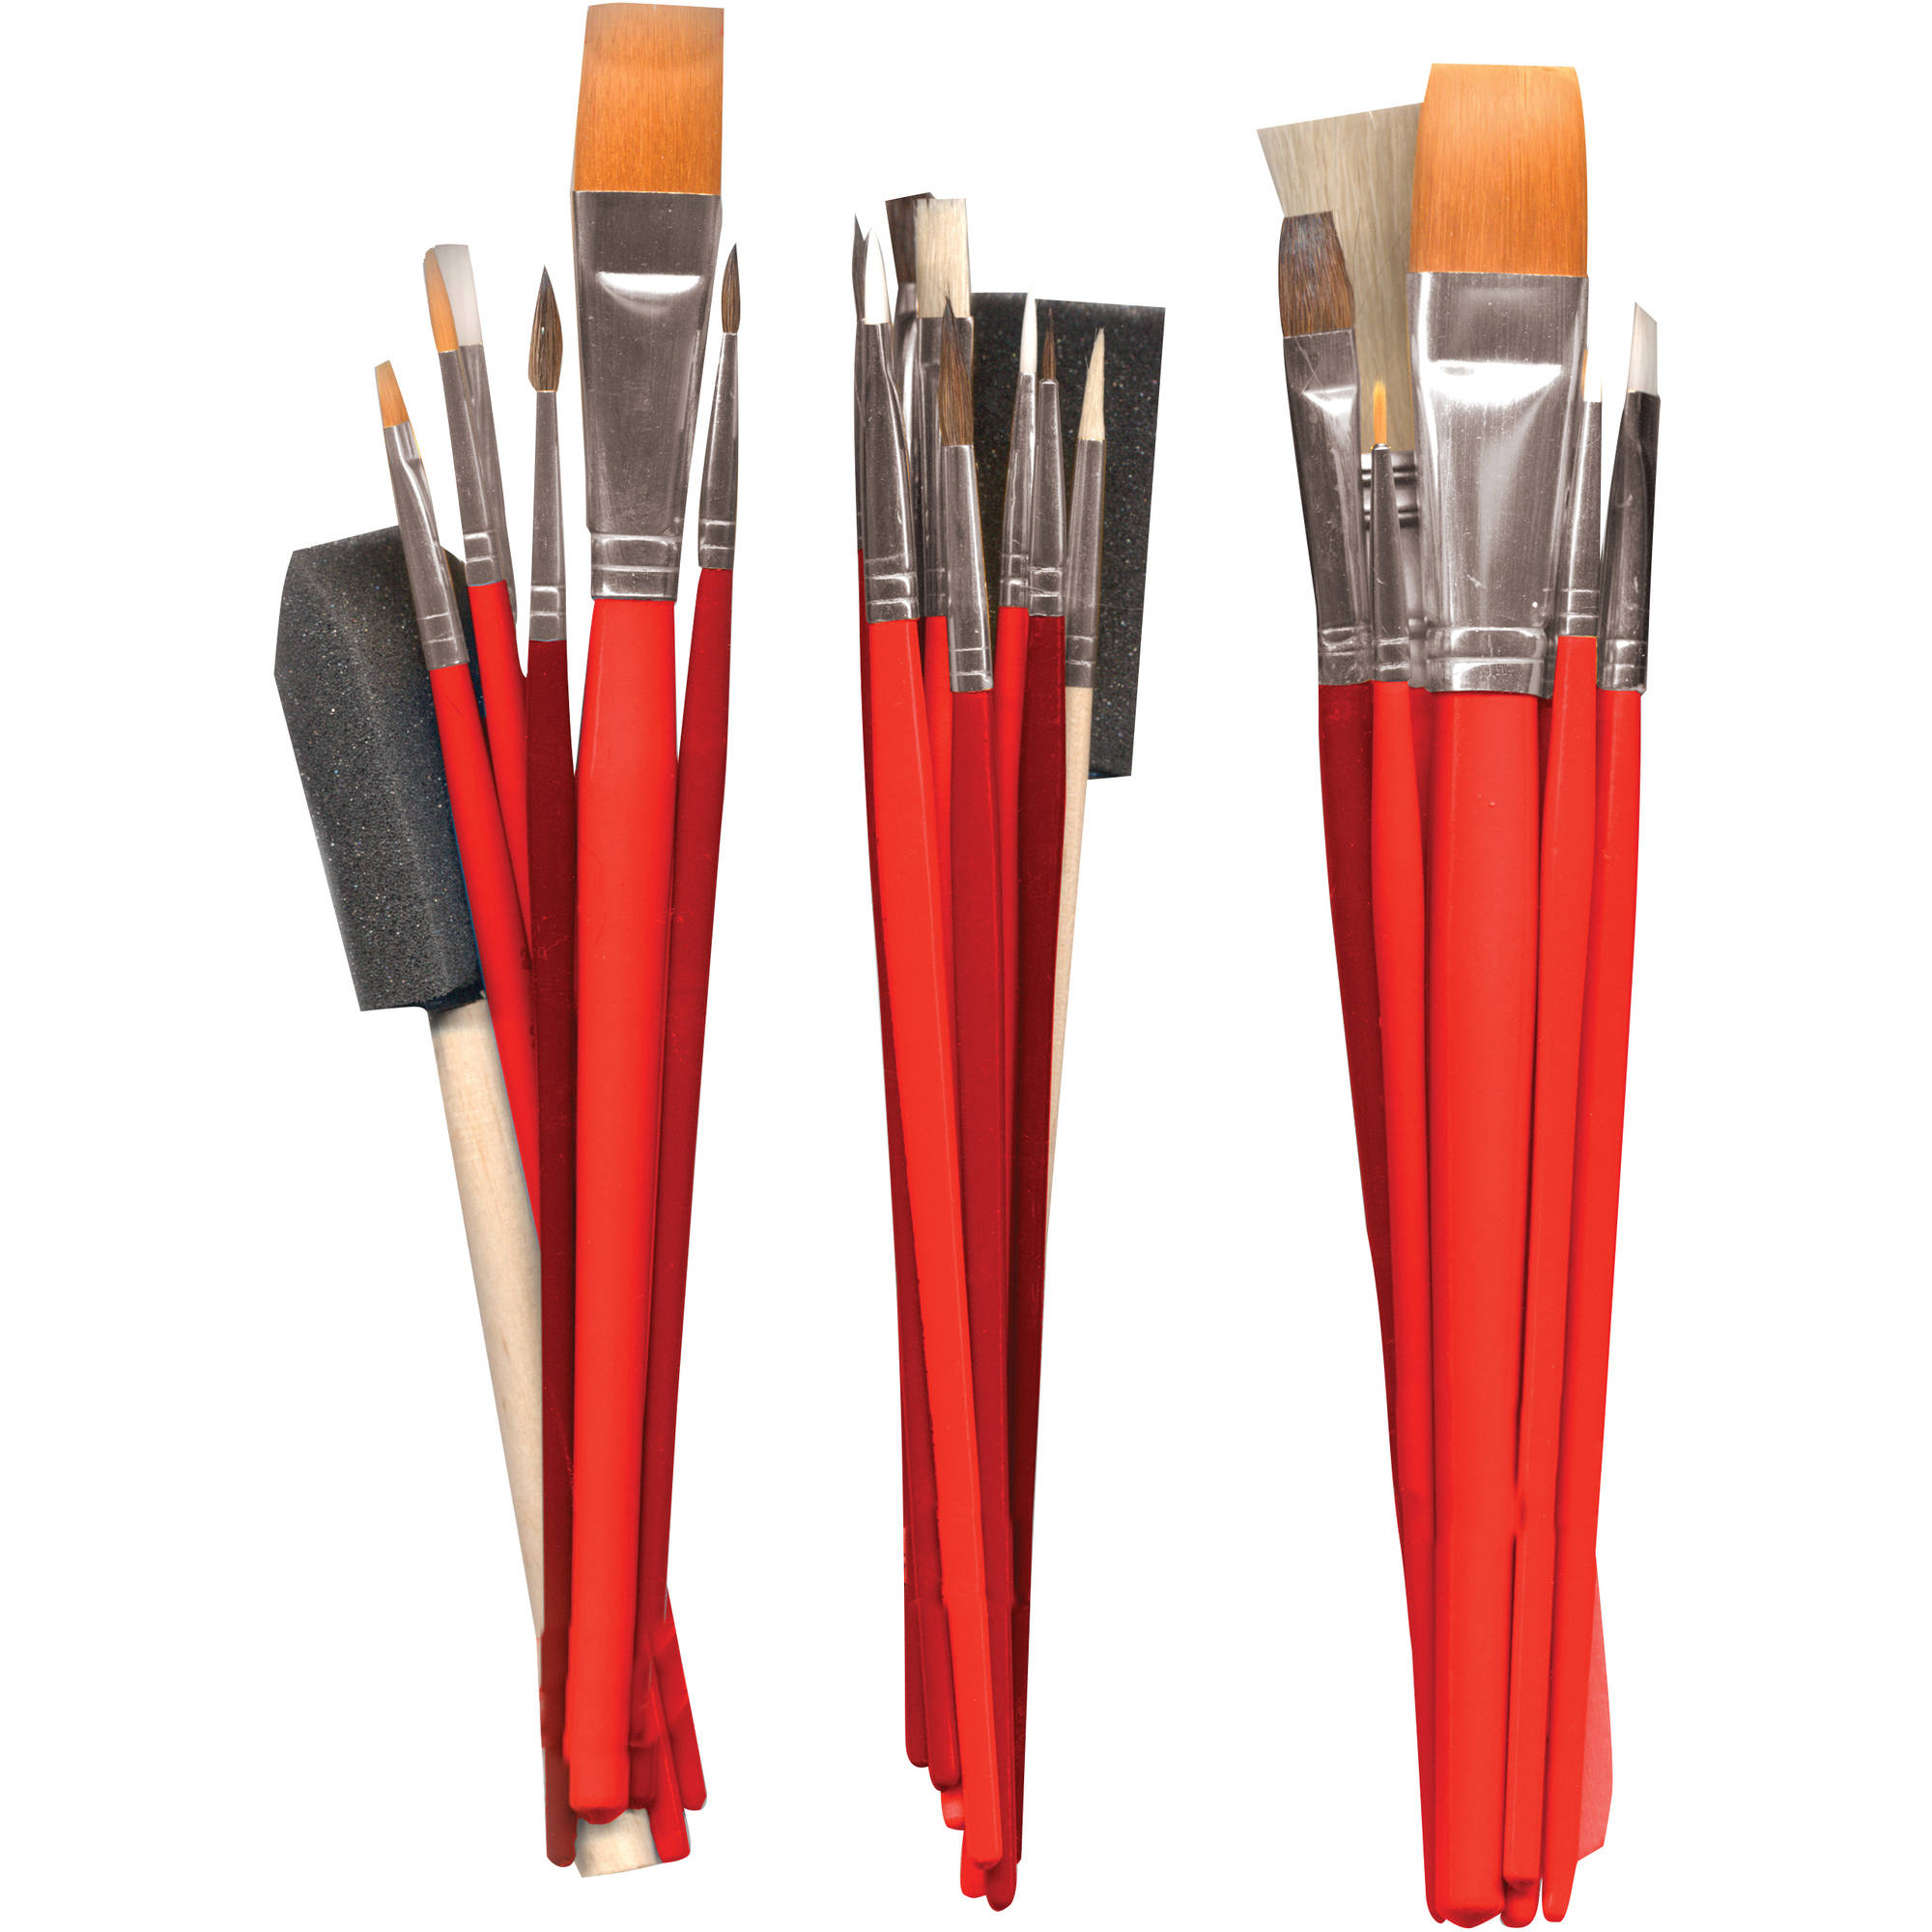 Plaid Paint Brush Super Value Pack, 25 Piece - image 2 of 2